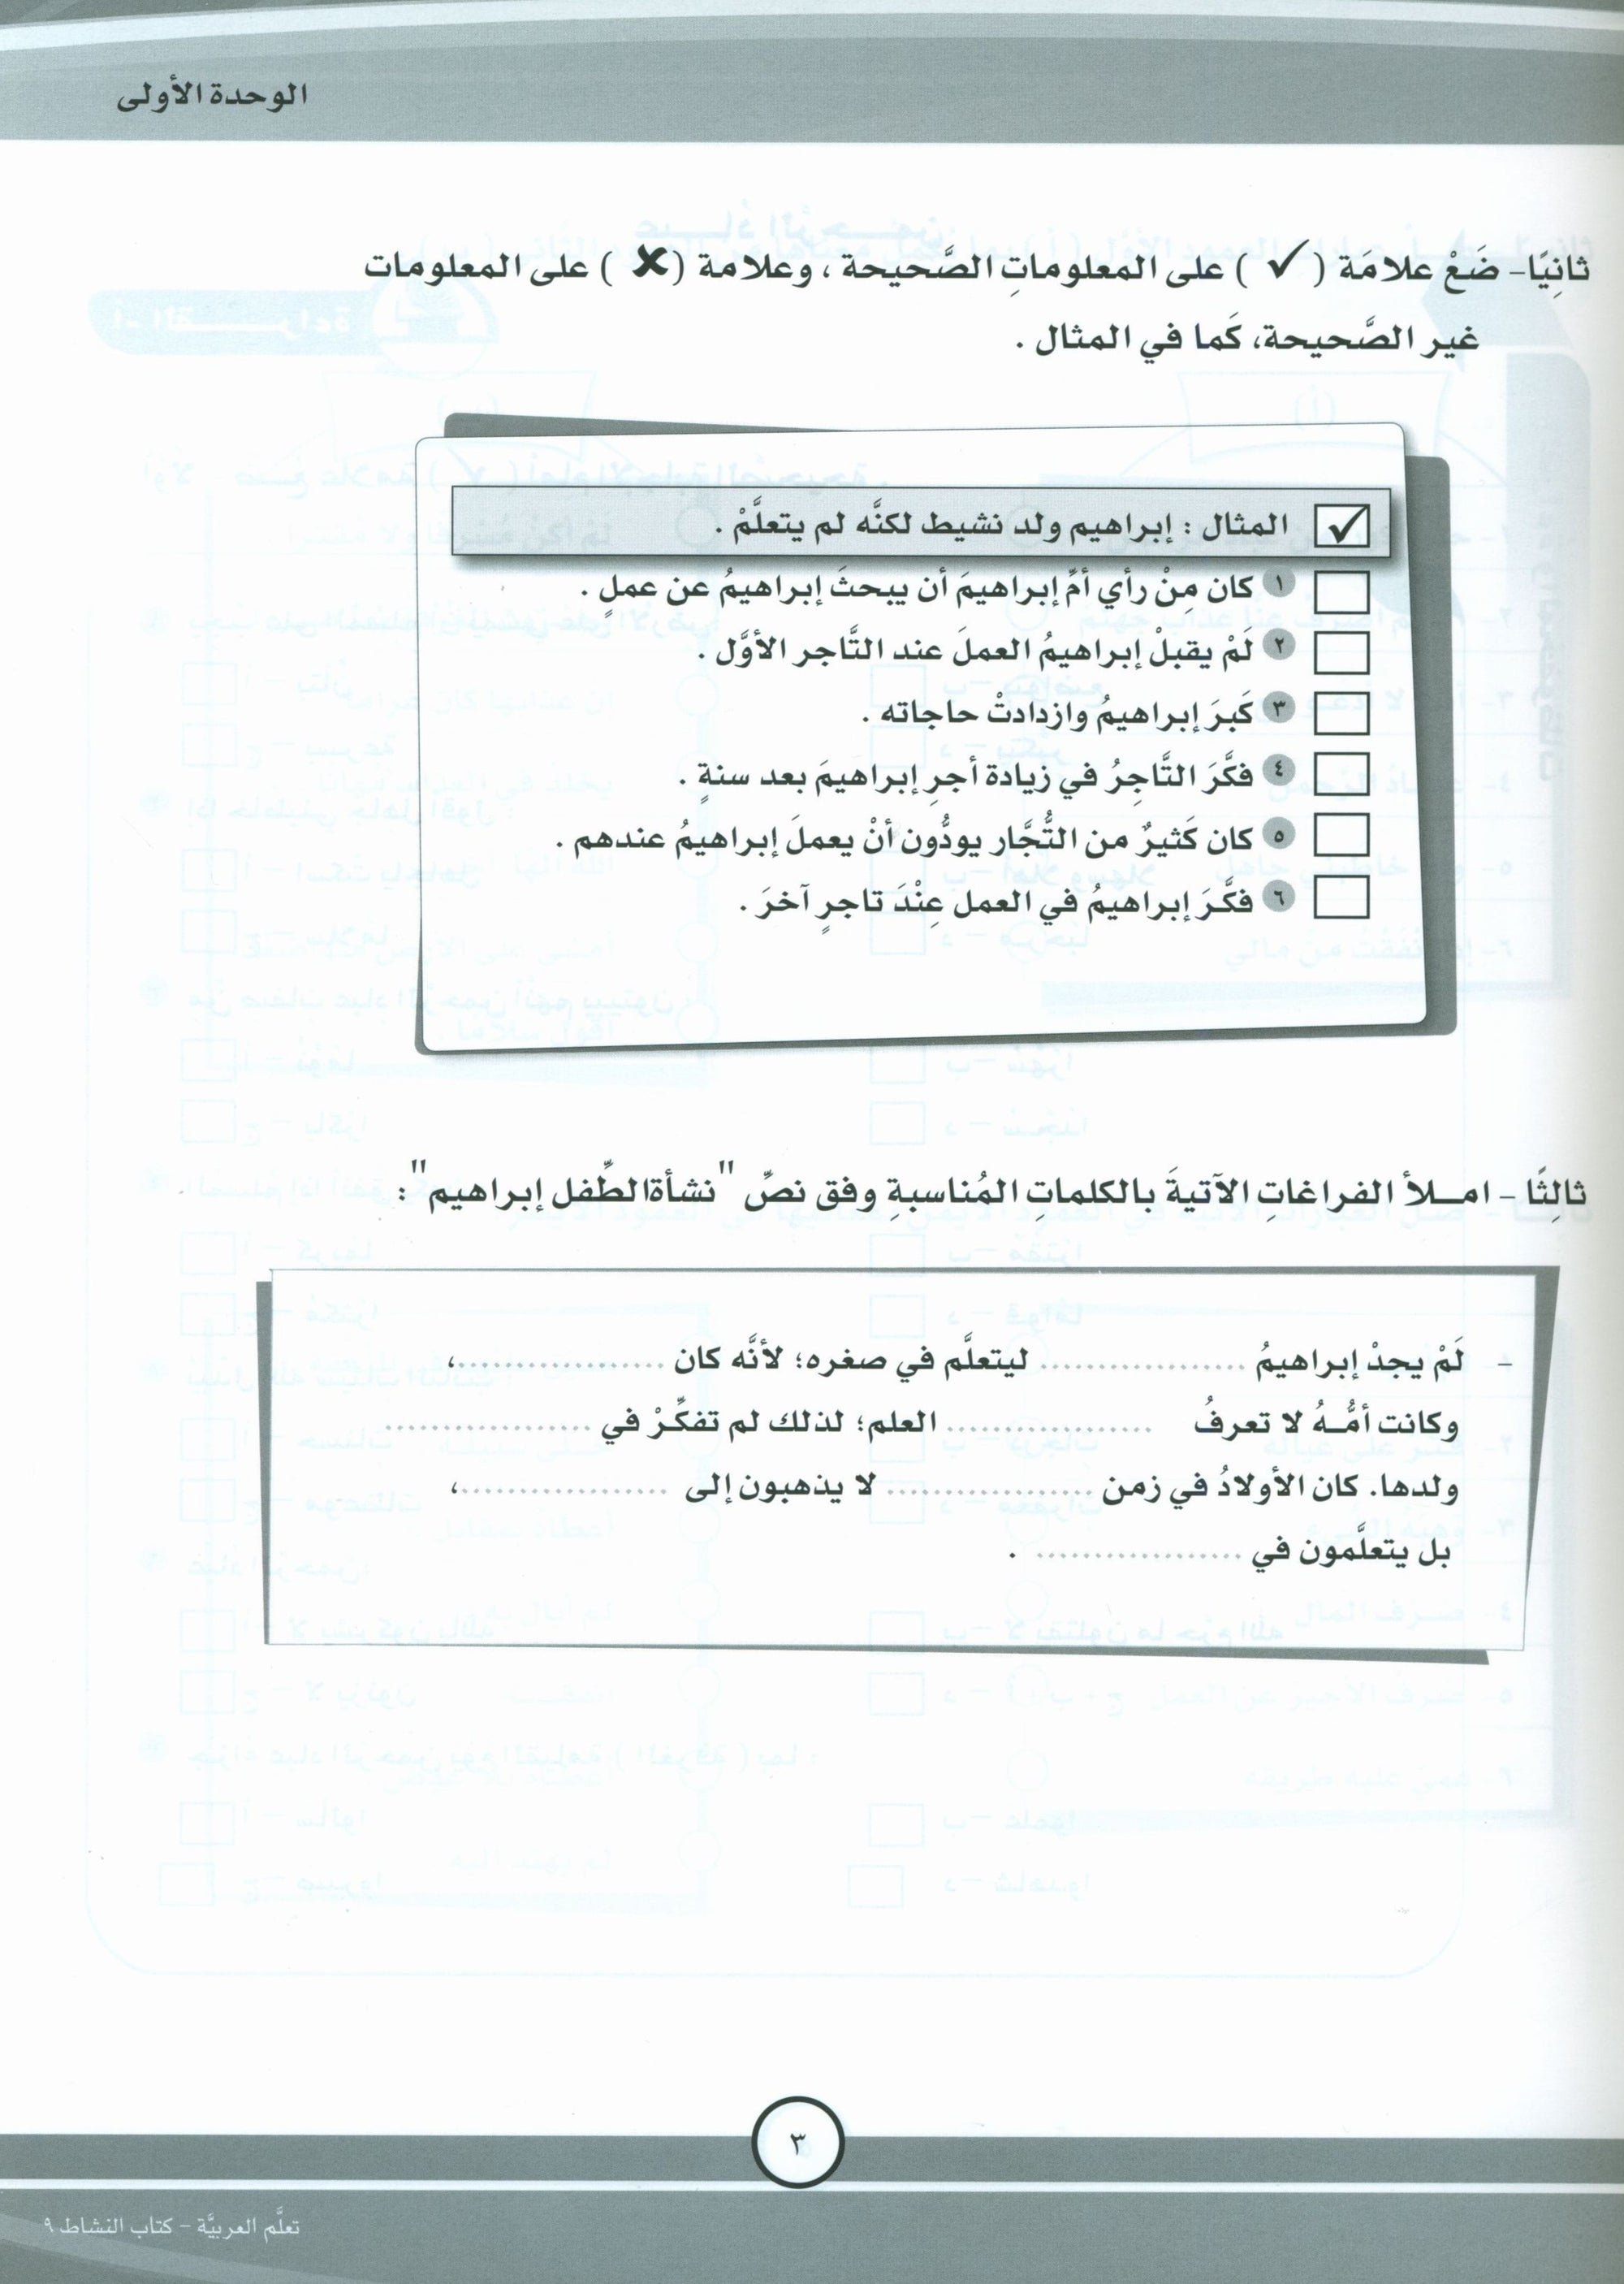 ICO Learn Arabic Workbook Level 9 Part 1 تعلم العربية كتاب التدريبات